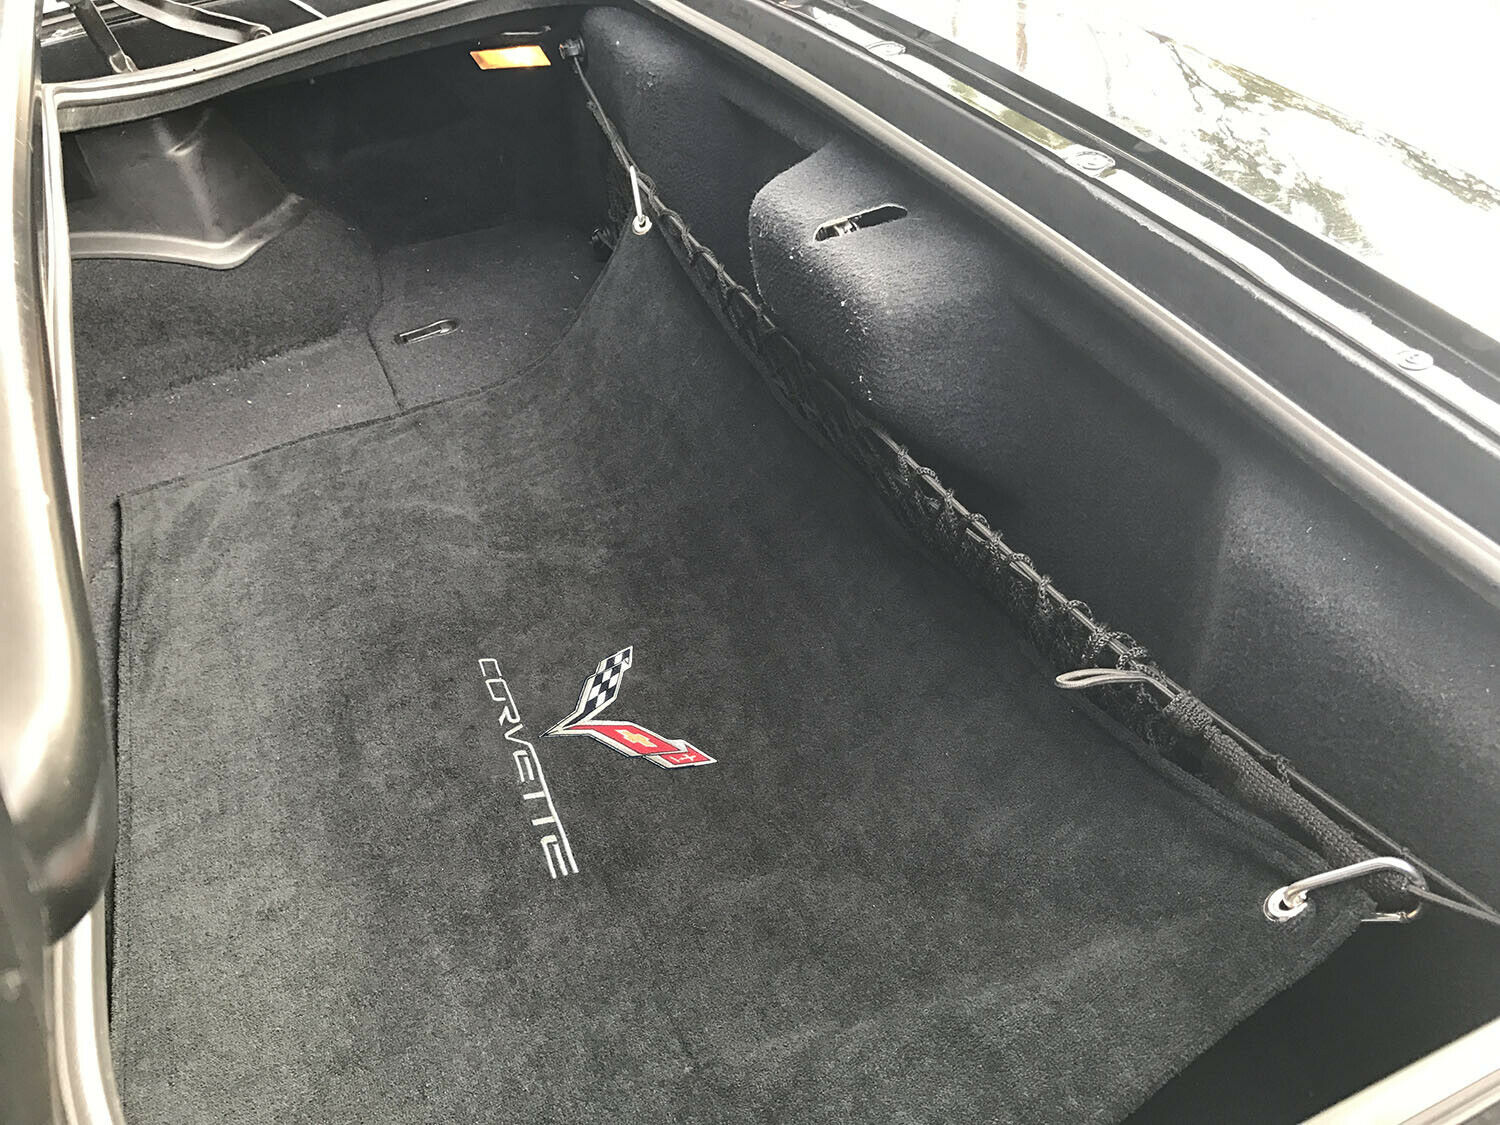 Corvette Seat Armour Trunk Towel Protector - Black : 2014-2019 C7 Stingray, Z51, Z06, Grand Sport